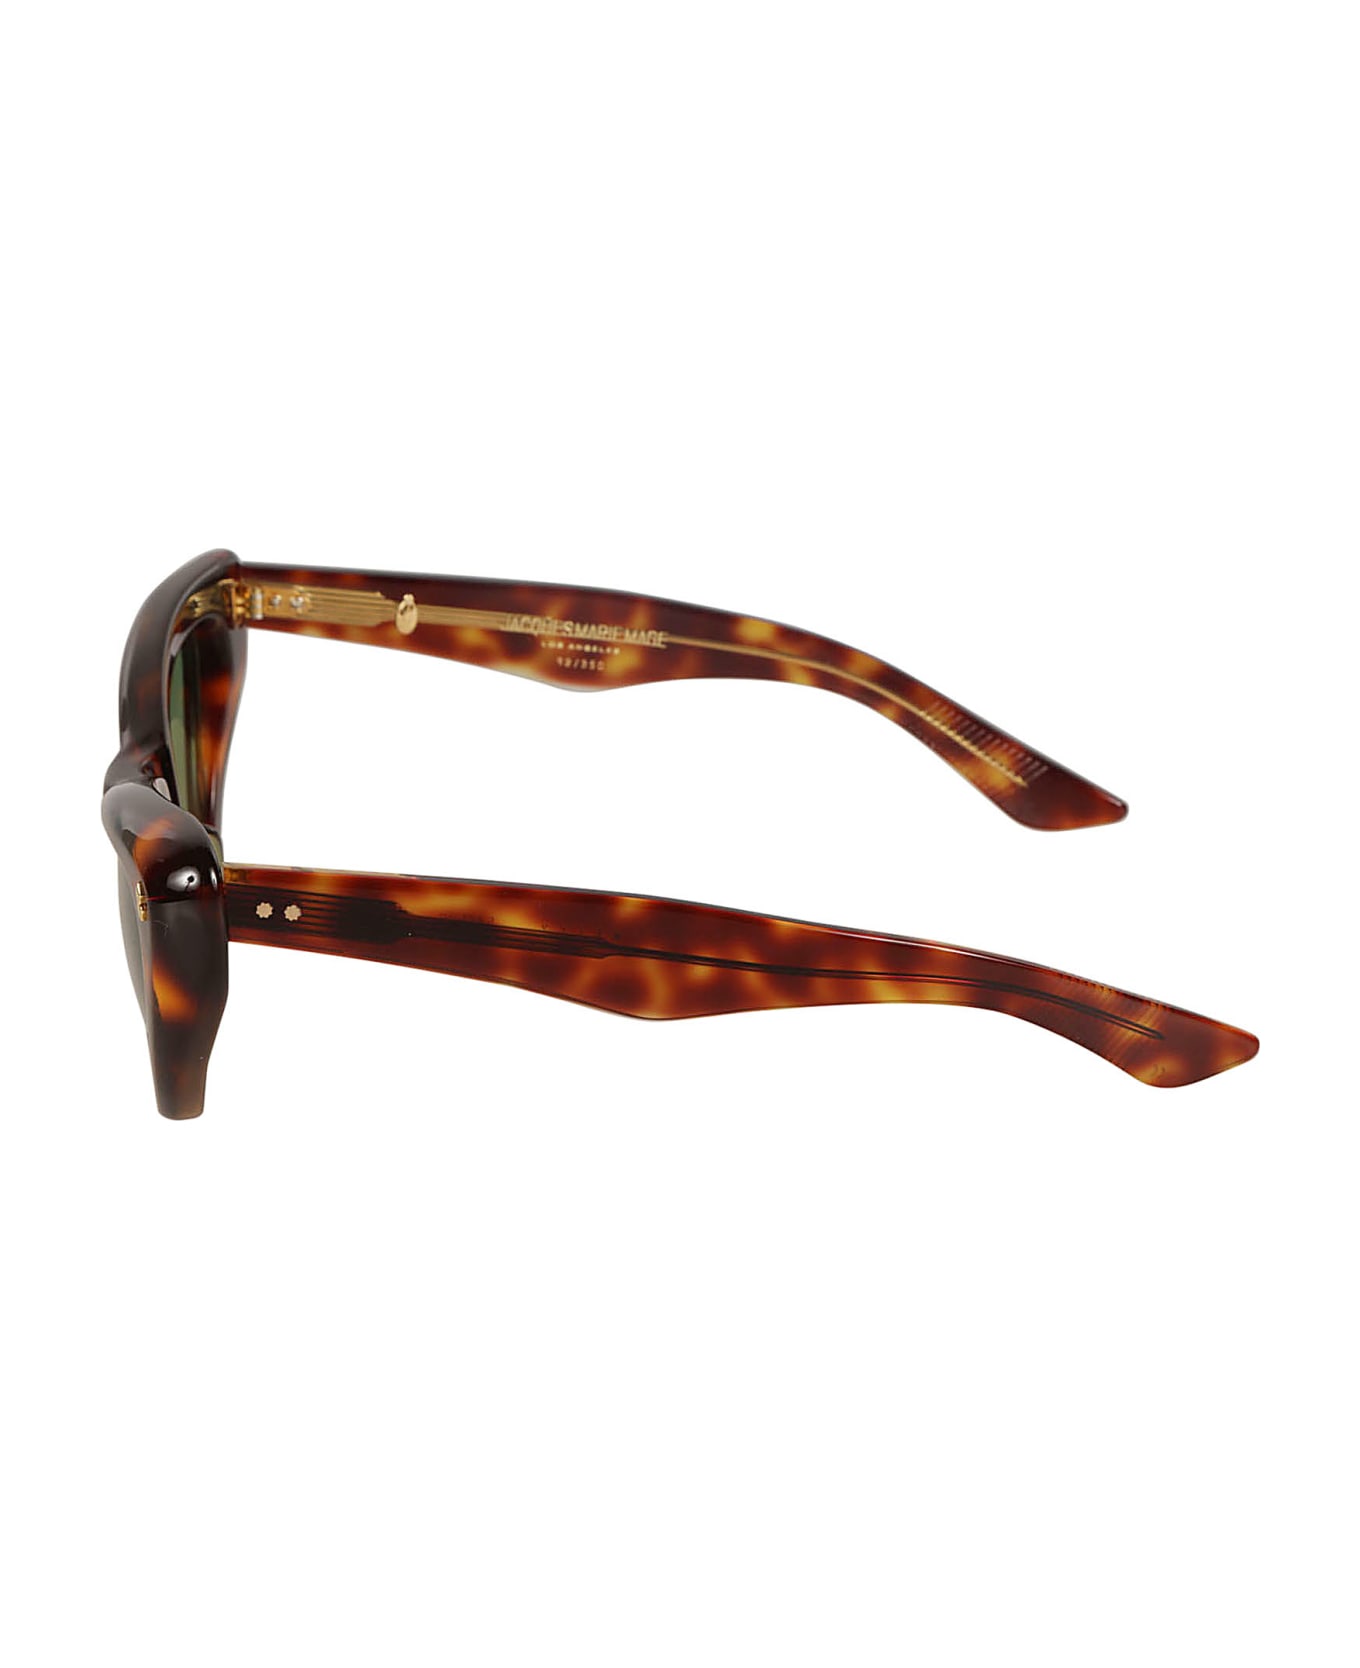 Jacques Marie Mage Kelly Sunglasses Sunglasses - havana